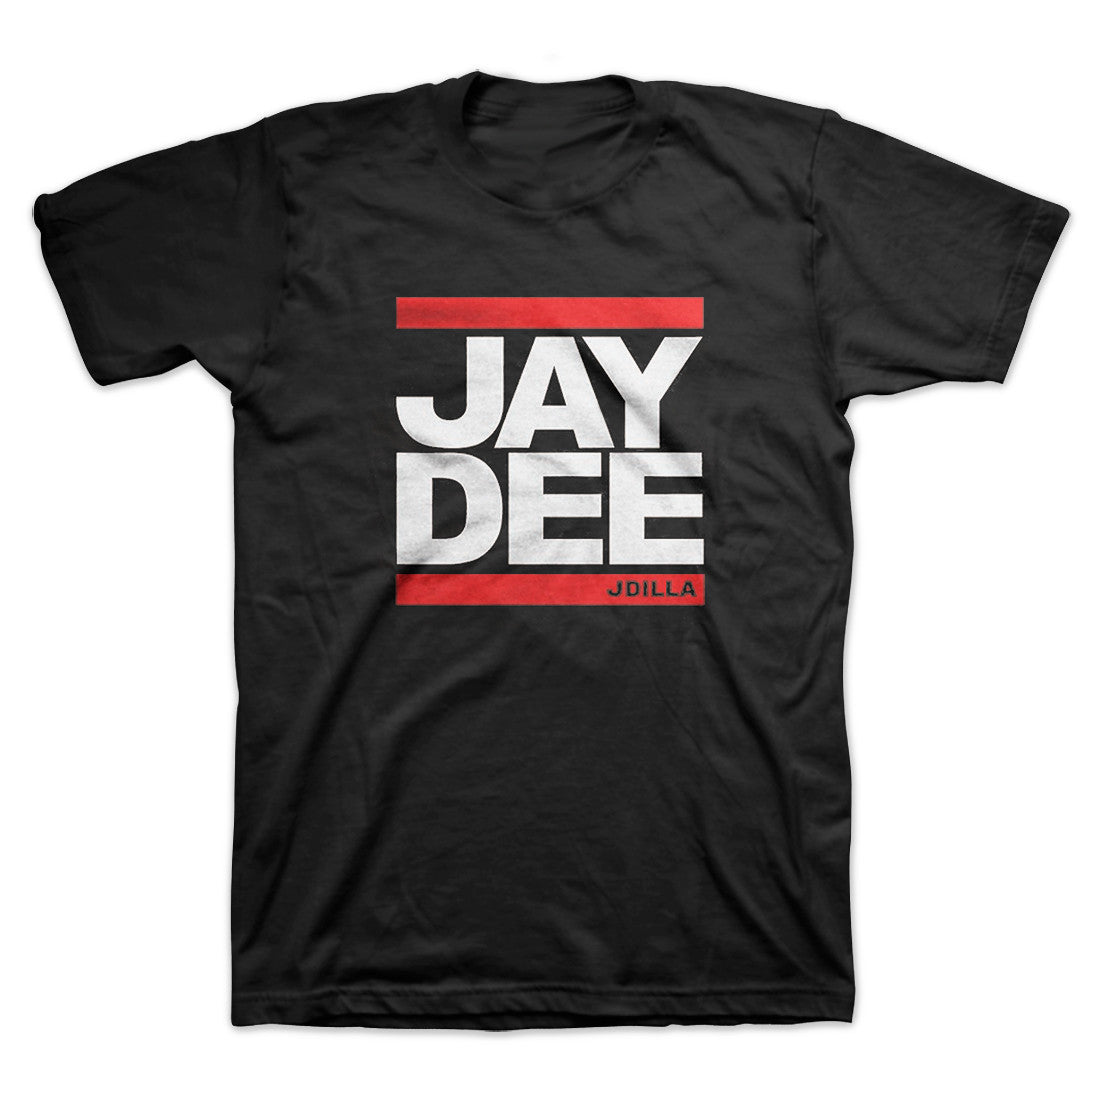 J Dilla - Jay Dee Men's Shirt, Black - The Giant Peach